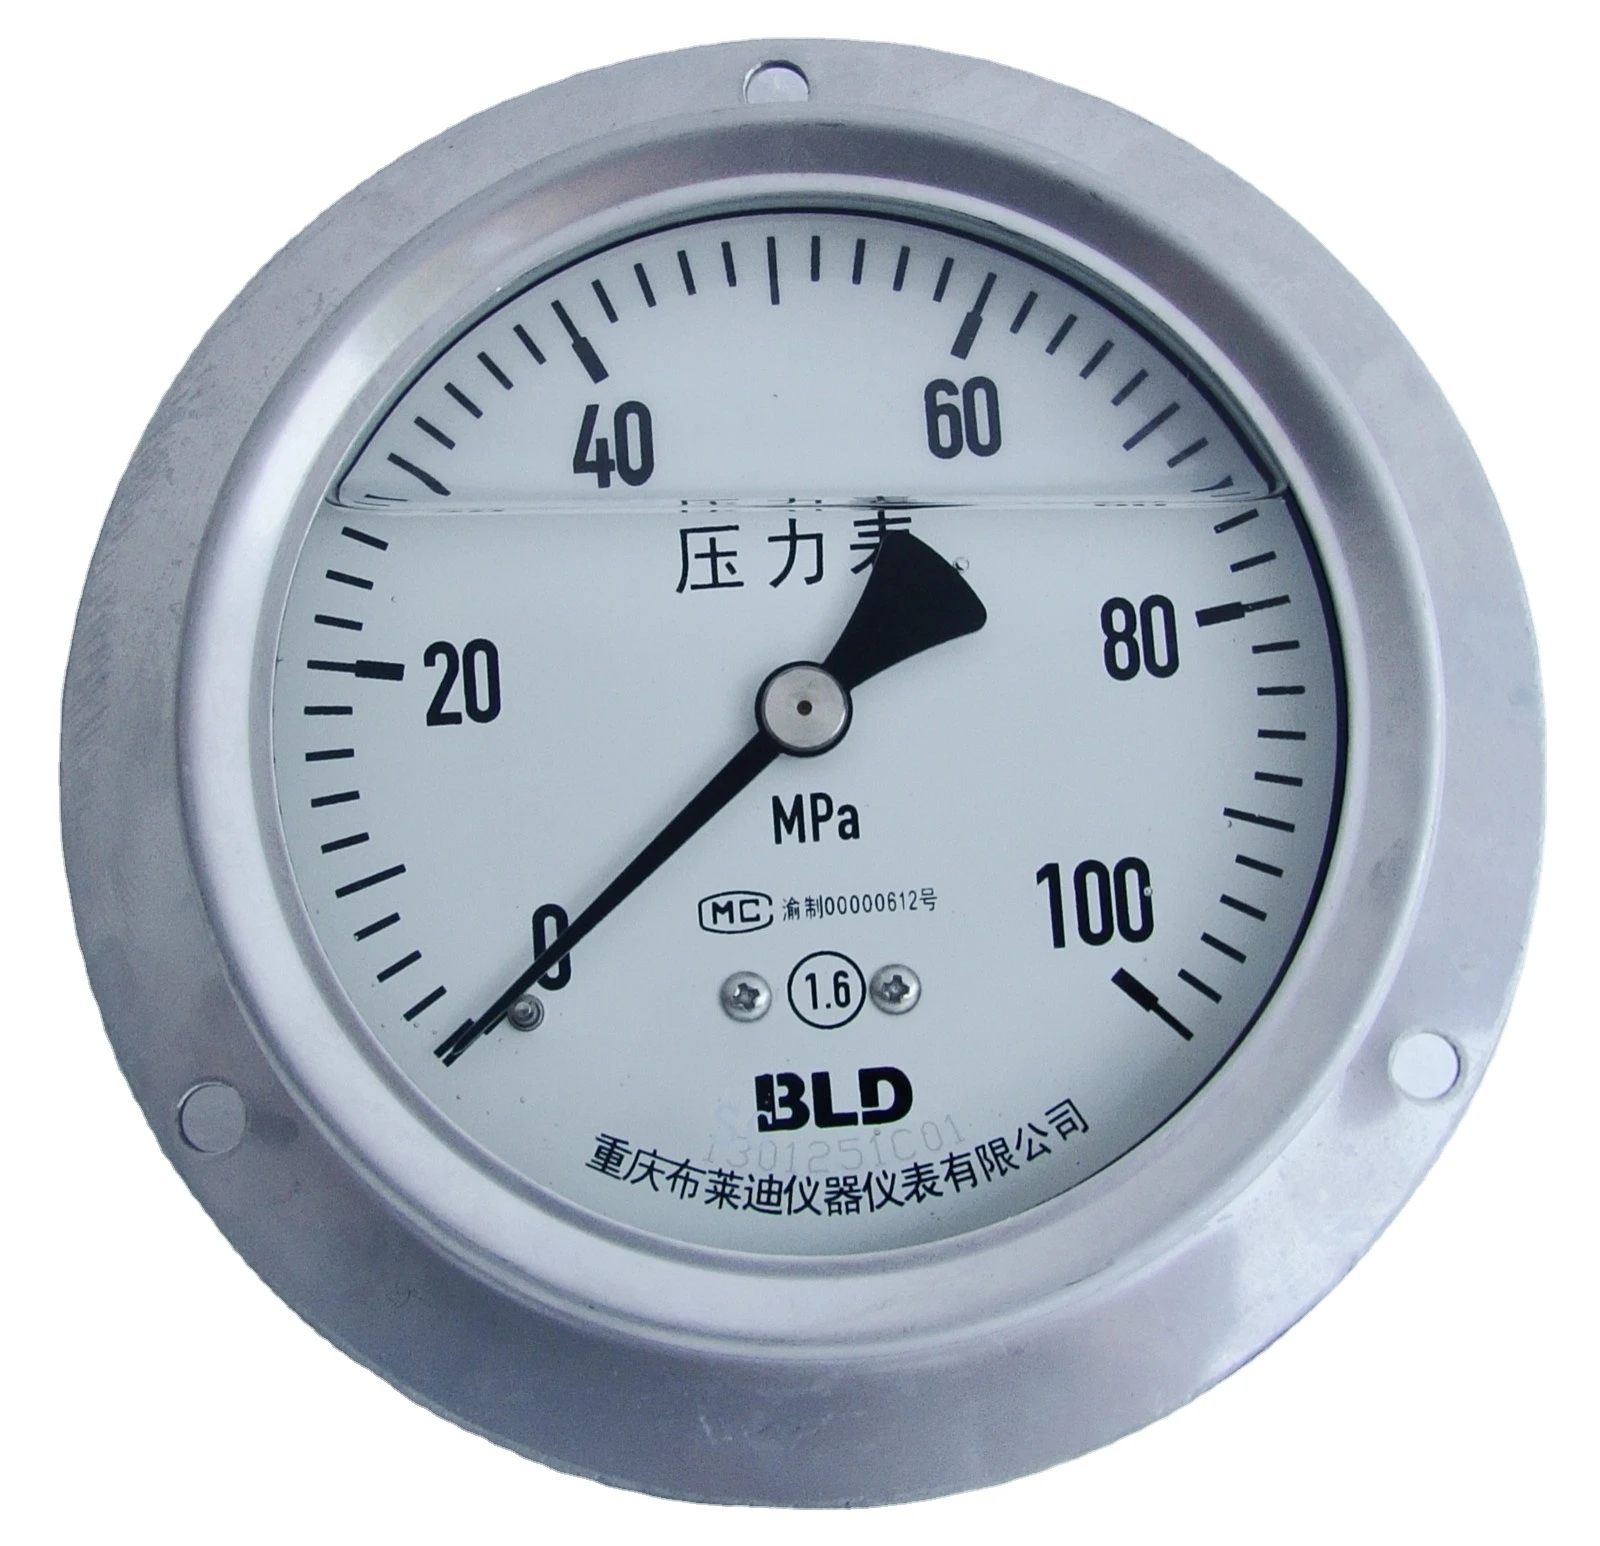 All stainless steel seismic pressure gauge YTHN-250